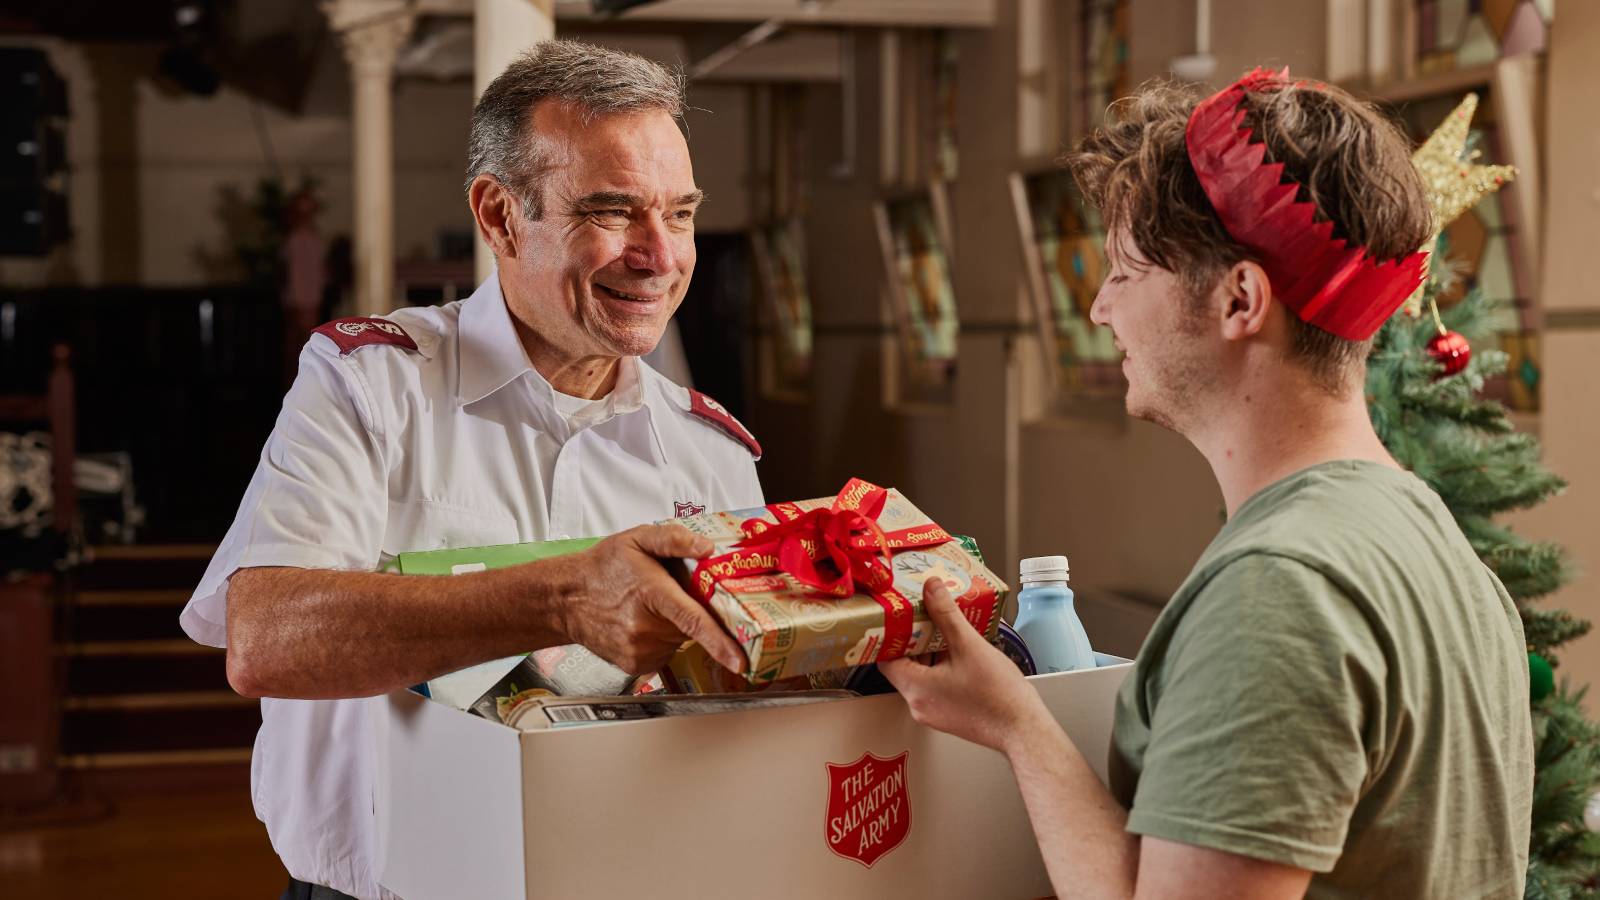 Salvos officer handing over a Christmas gift